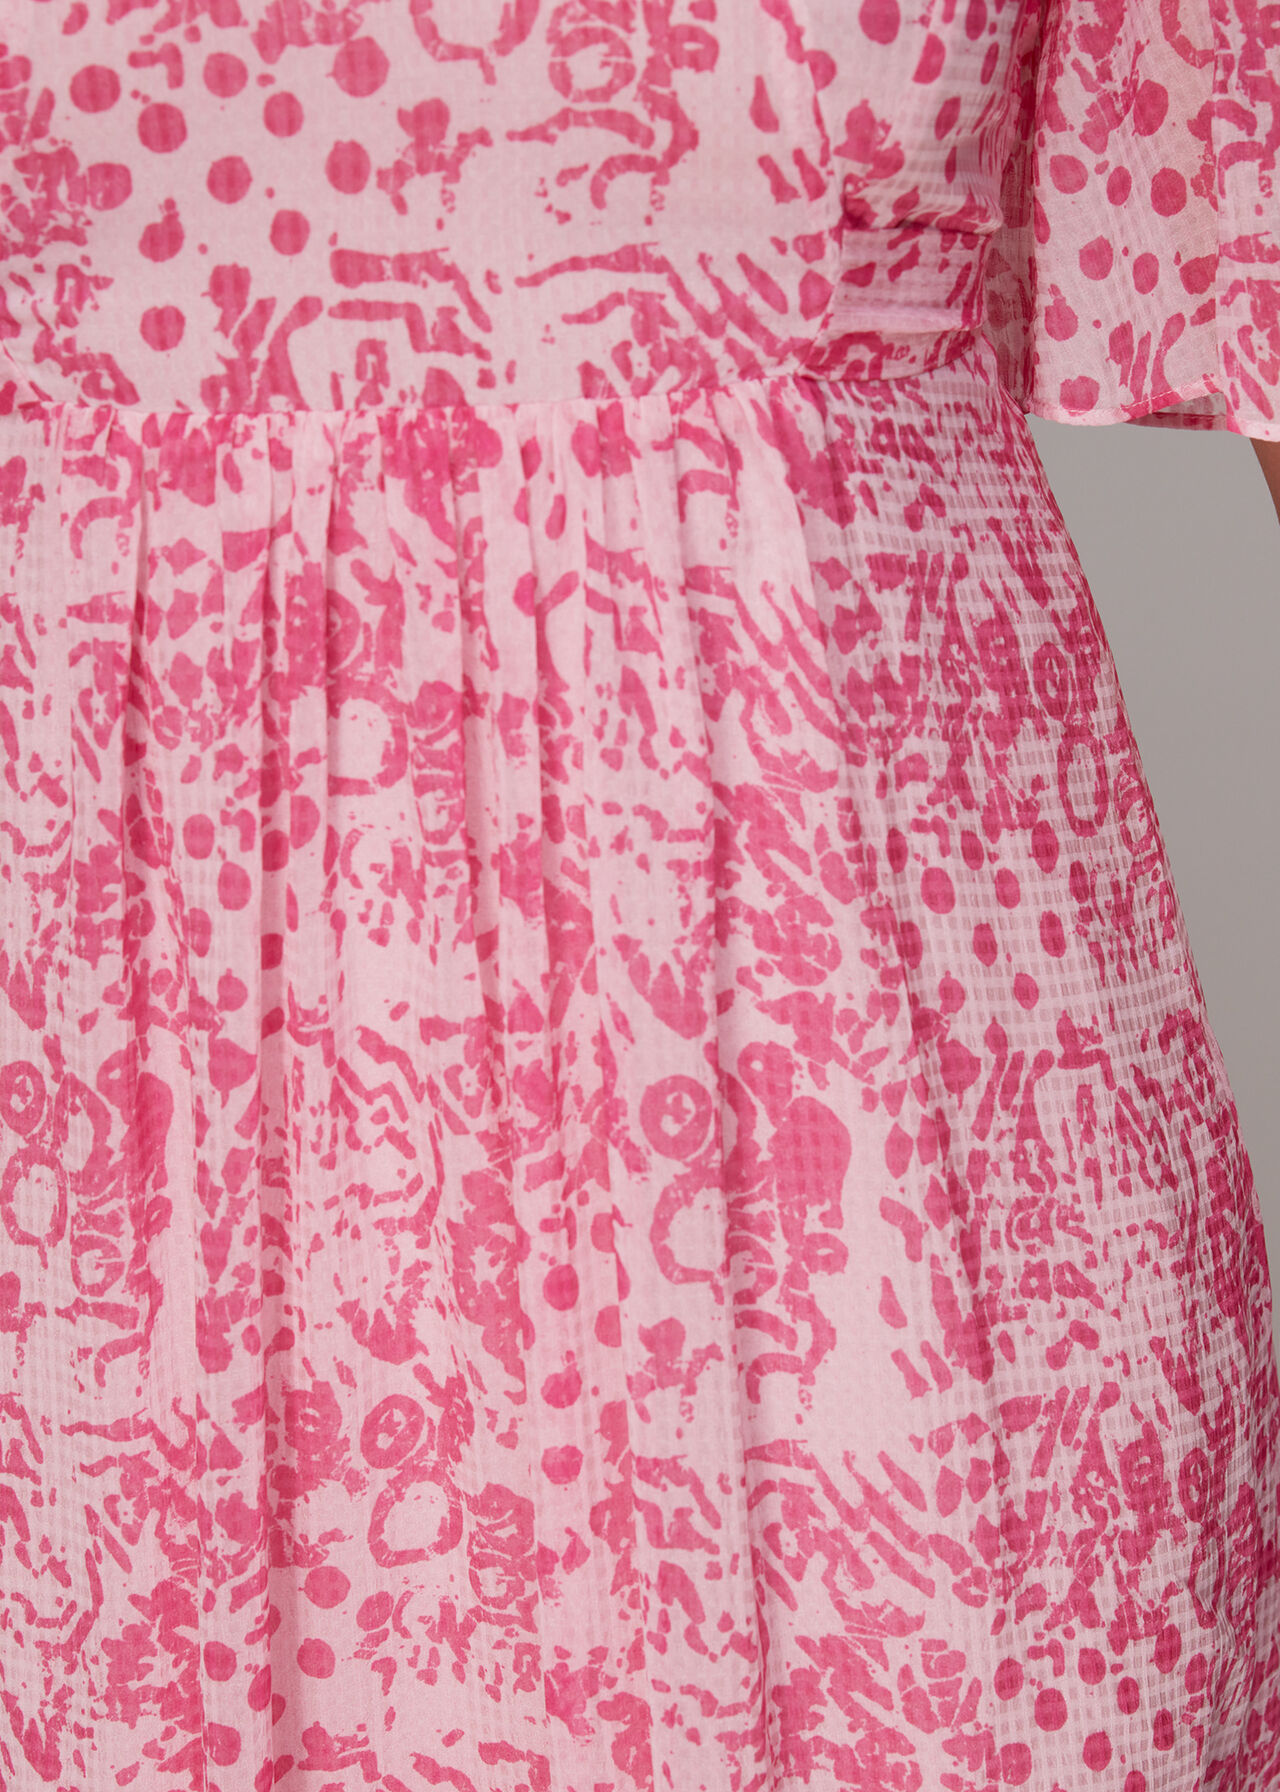 Abstract Batik Midi Dress